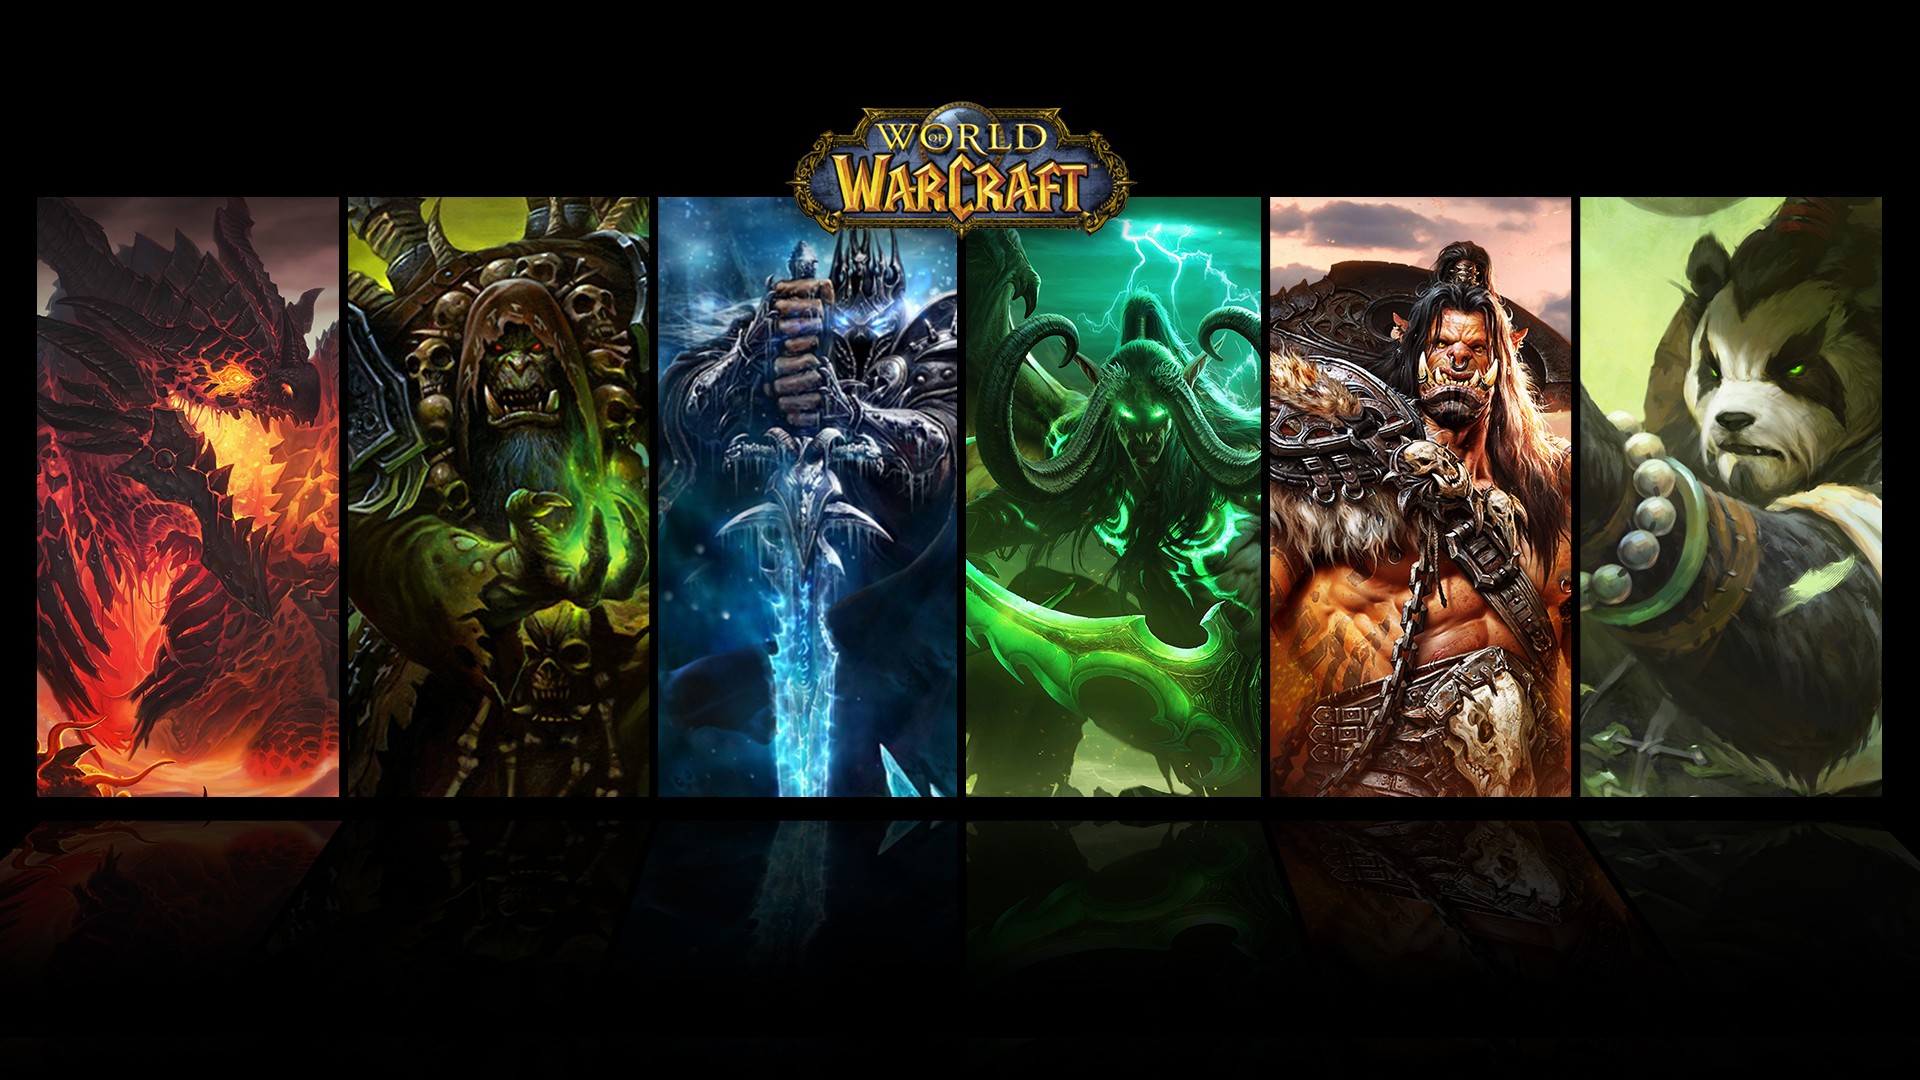 World Of Warcraft Deathwing Arthas Guldan Illidan Stormrage Grommash Hellscream Warcraft Collage Vid 1920x1080